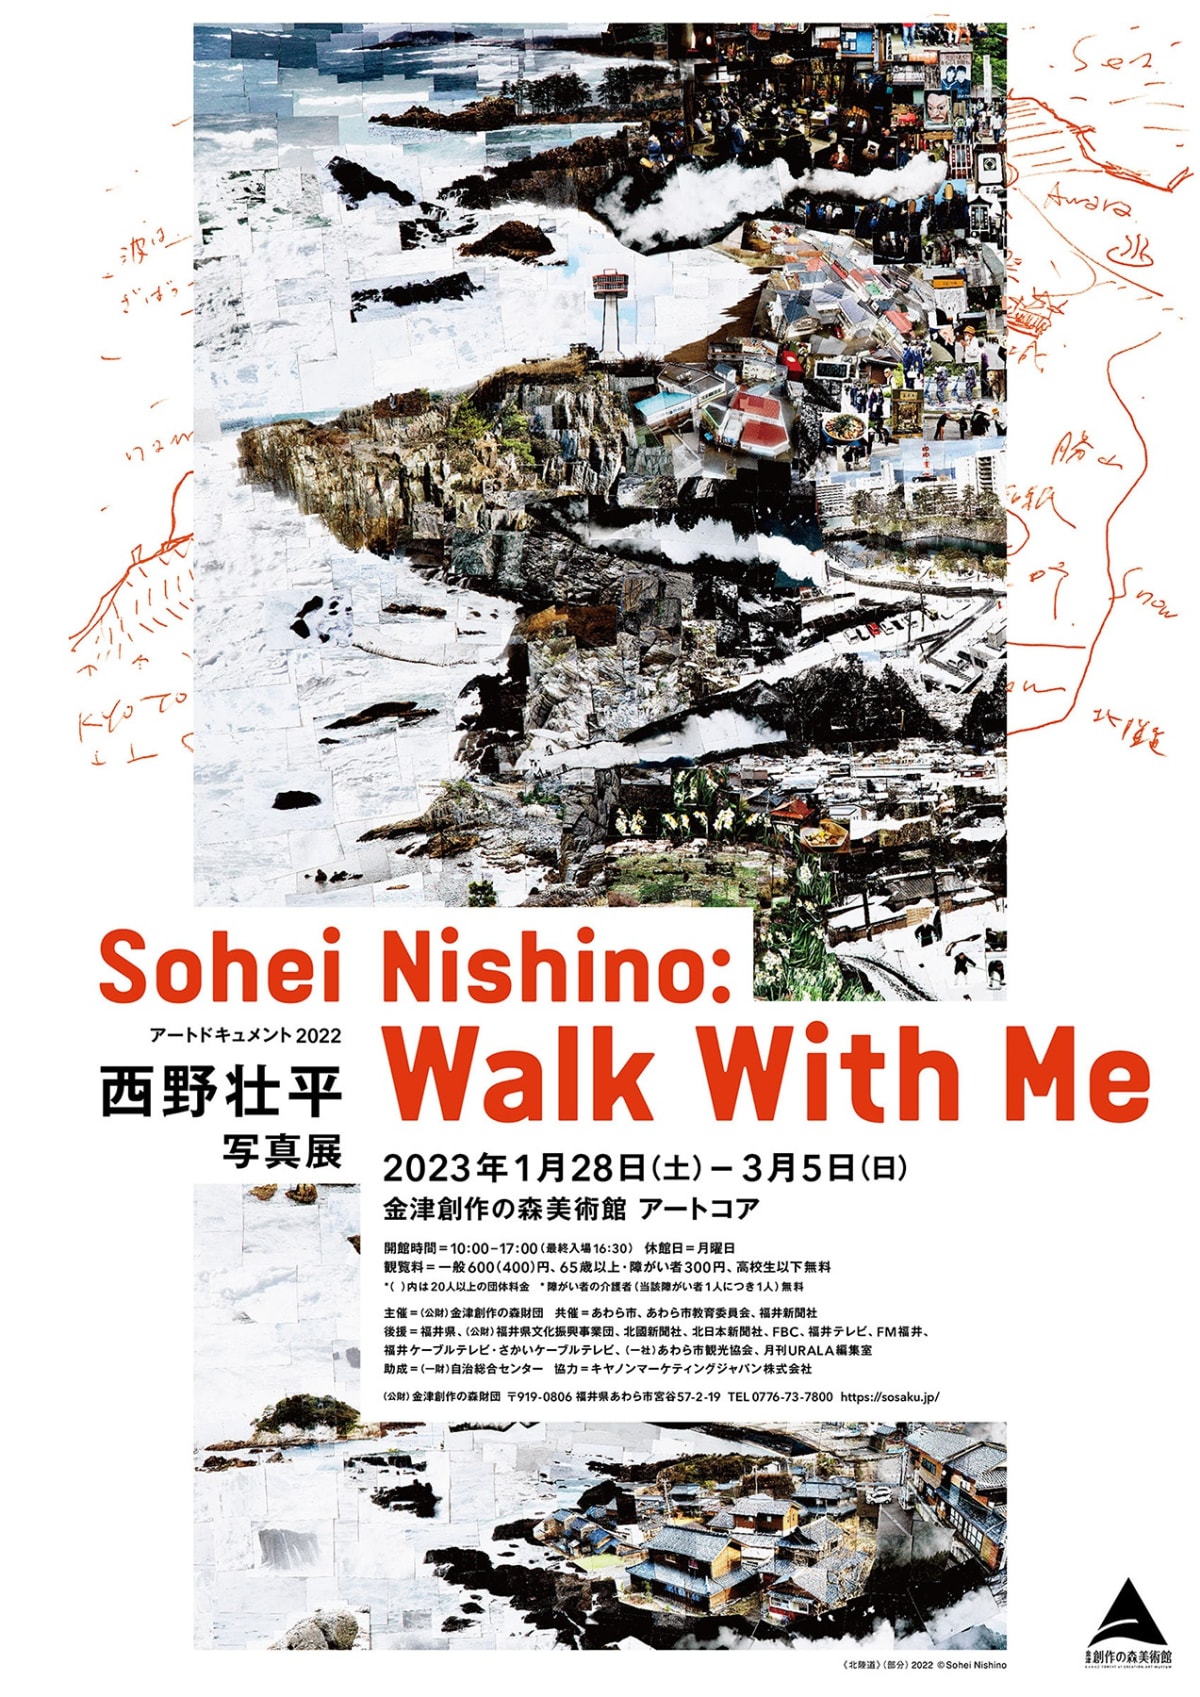 Sohei Nishino Solo Exhibition | Walk With Me | Michael Hoppen Gallery